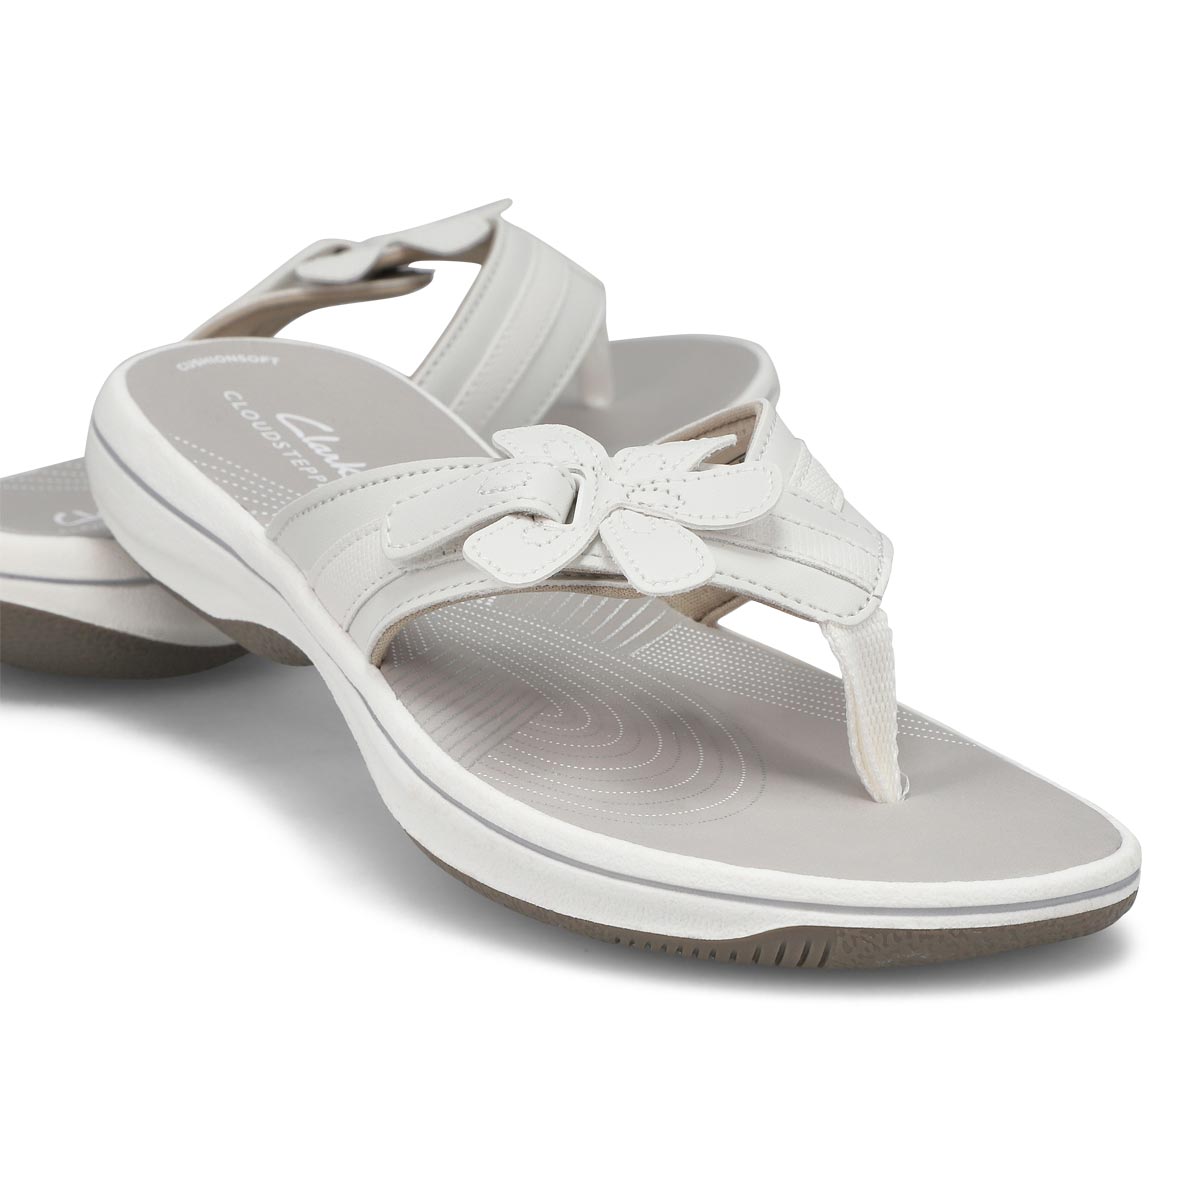 Women's Brinkley Thong Casual Sandal - White